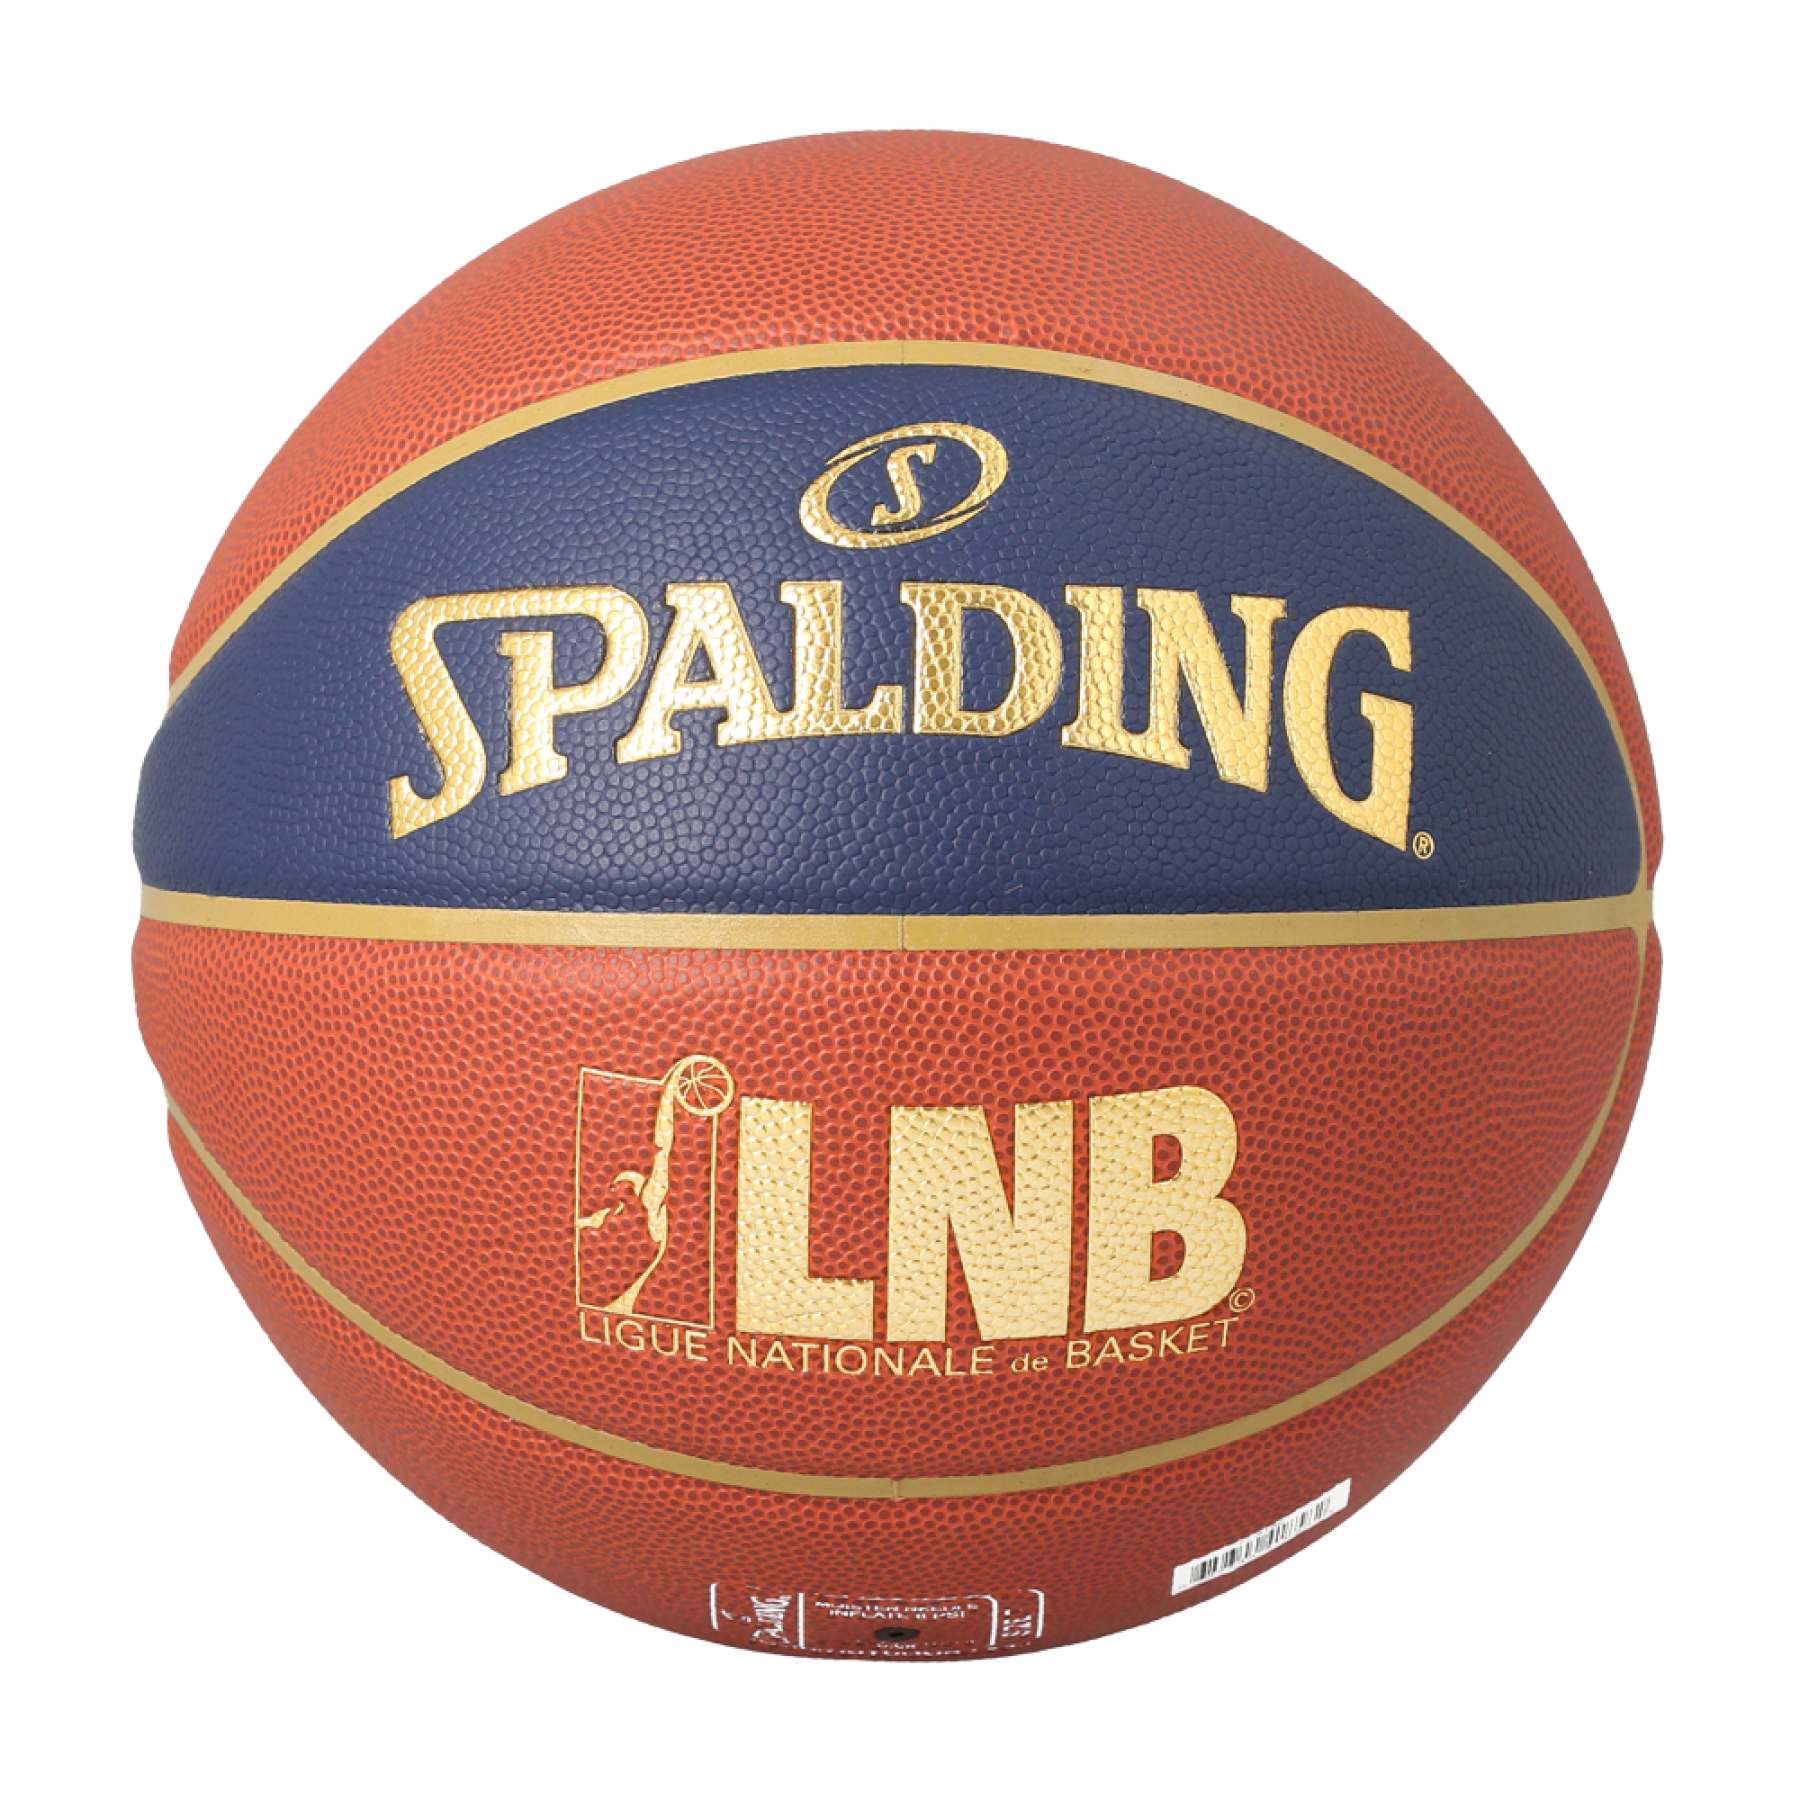 Basketboll Spalding React TF-250